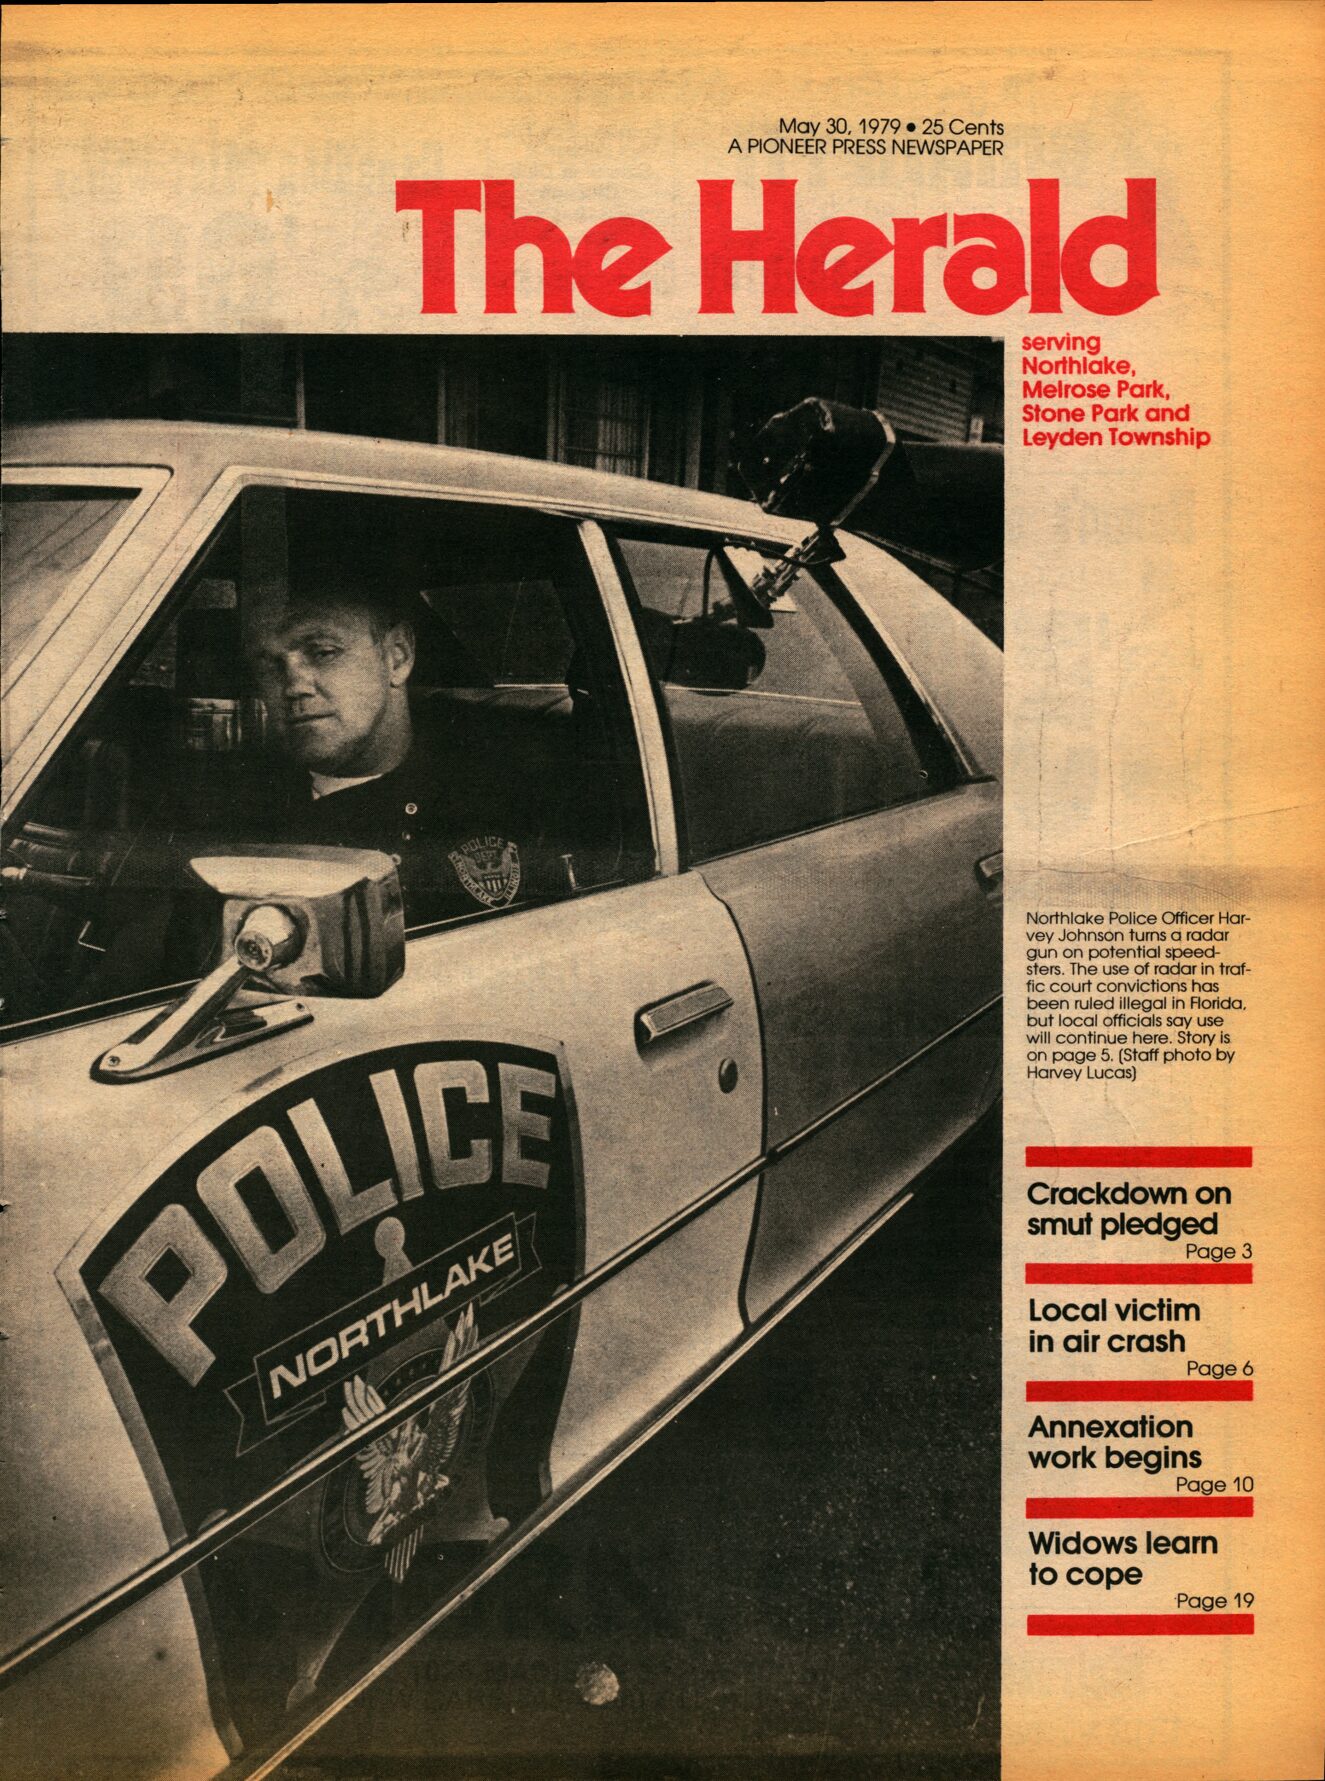 The Herald – 19790530